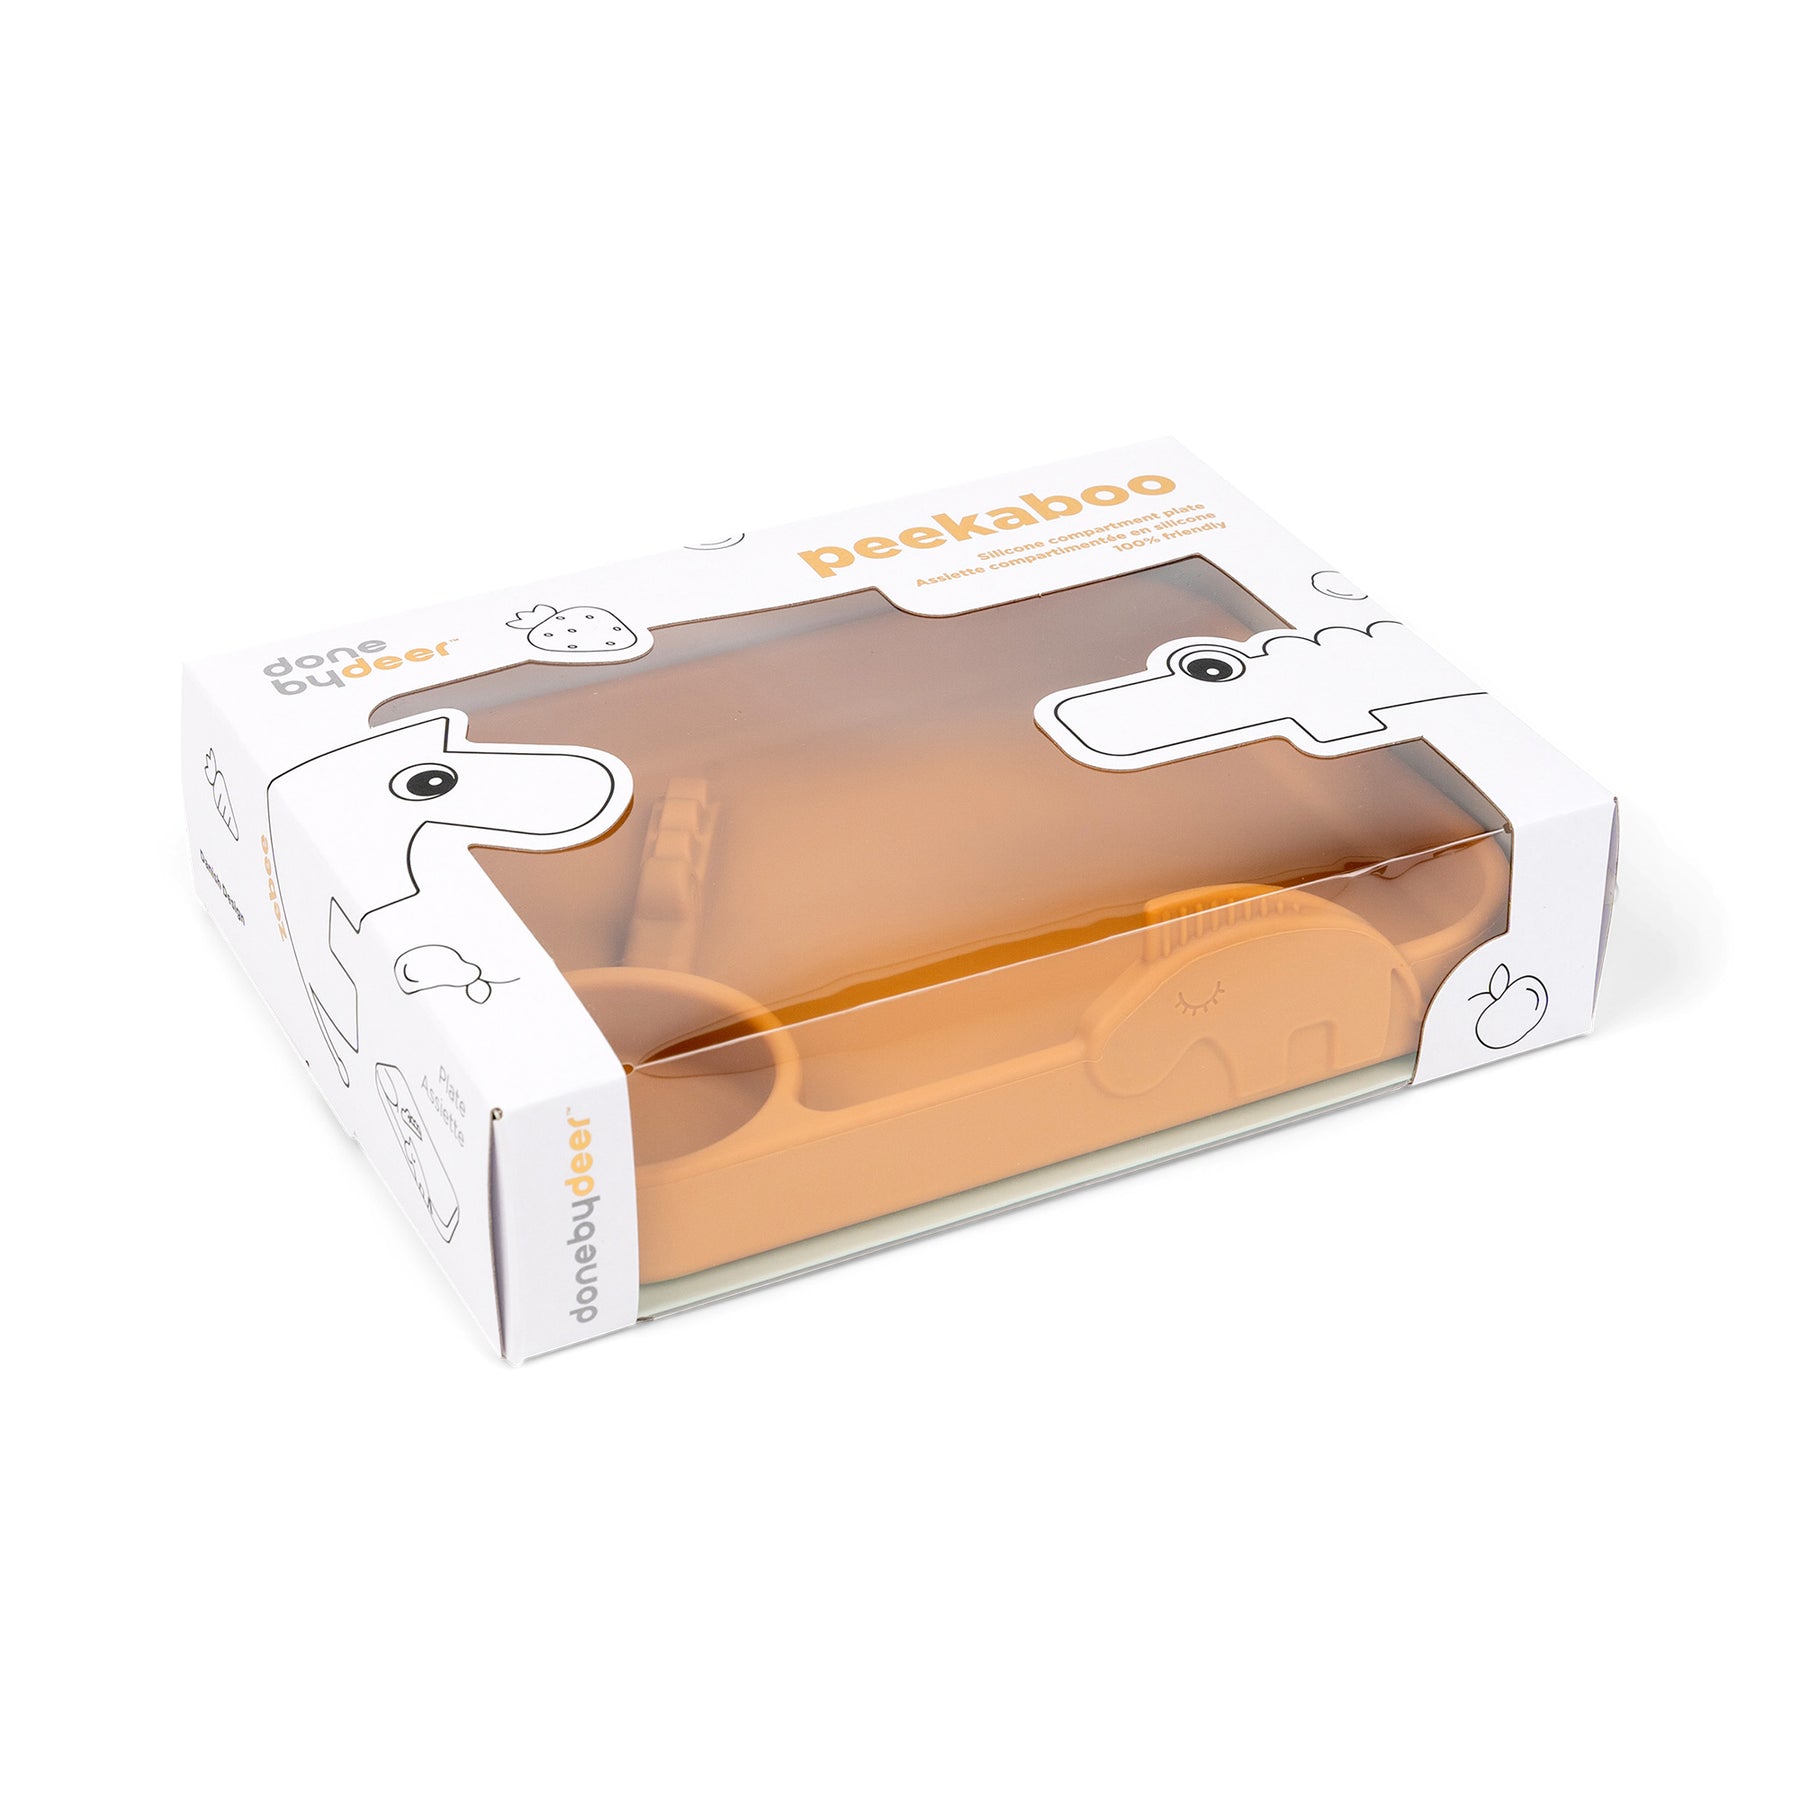 Peekaboo compartment plate - Deer friends - Mustard - Packaging